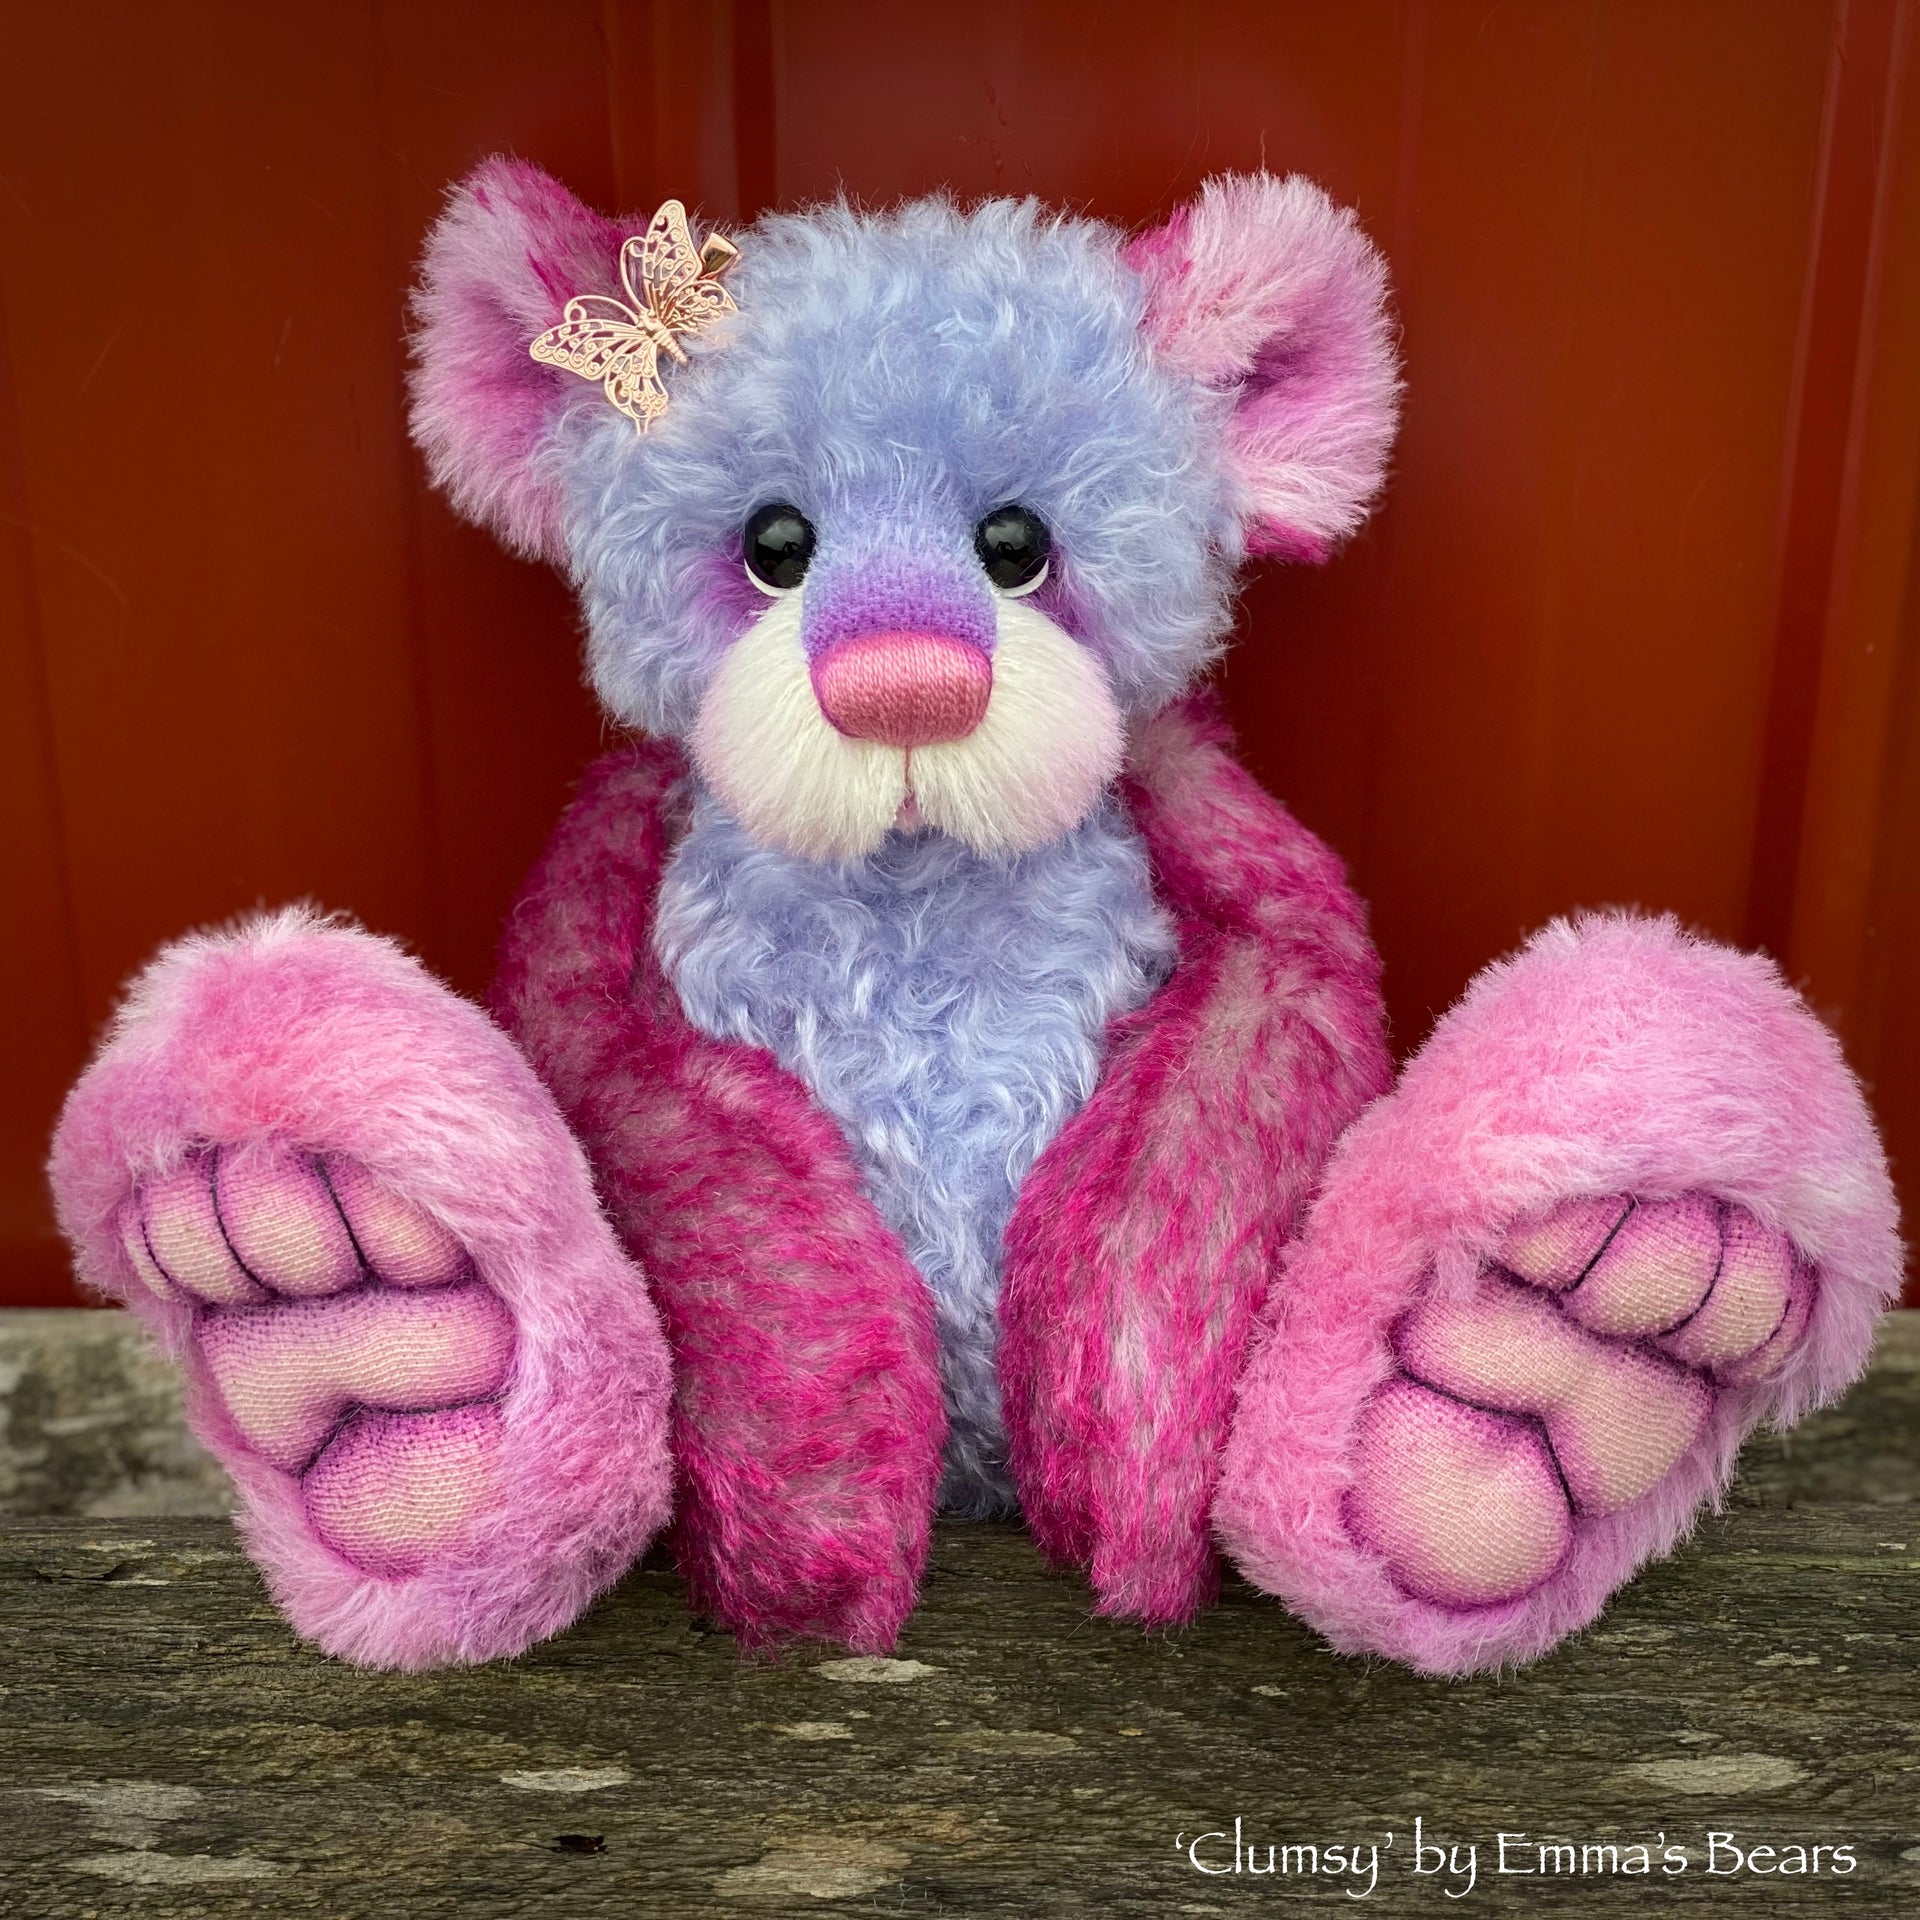 Clumsy - 12" Hand-dyed Mohair and Alpaca Bear by Emma's Bears - OOAK